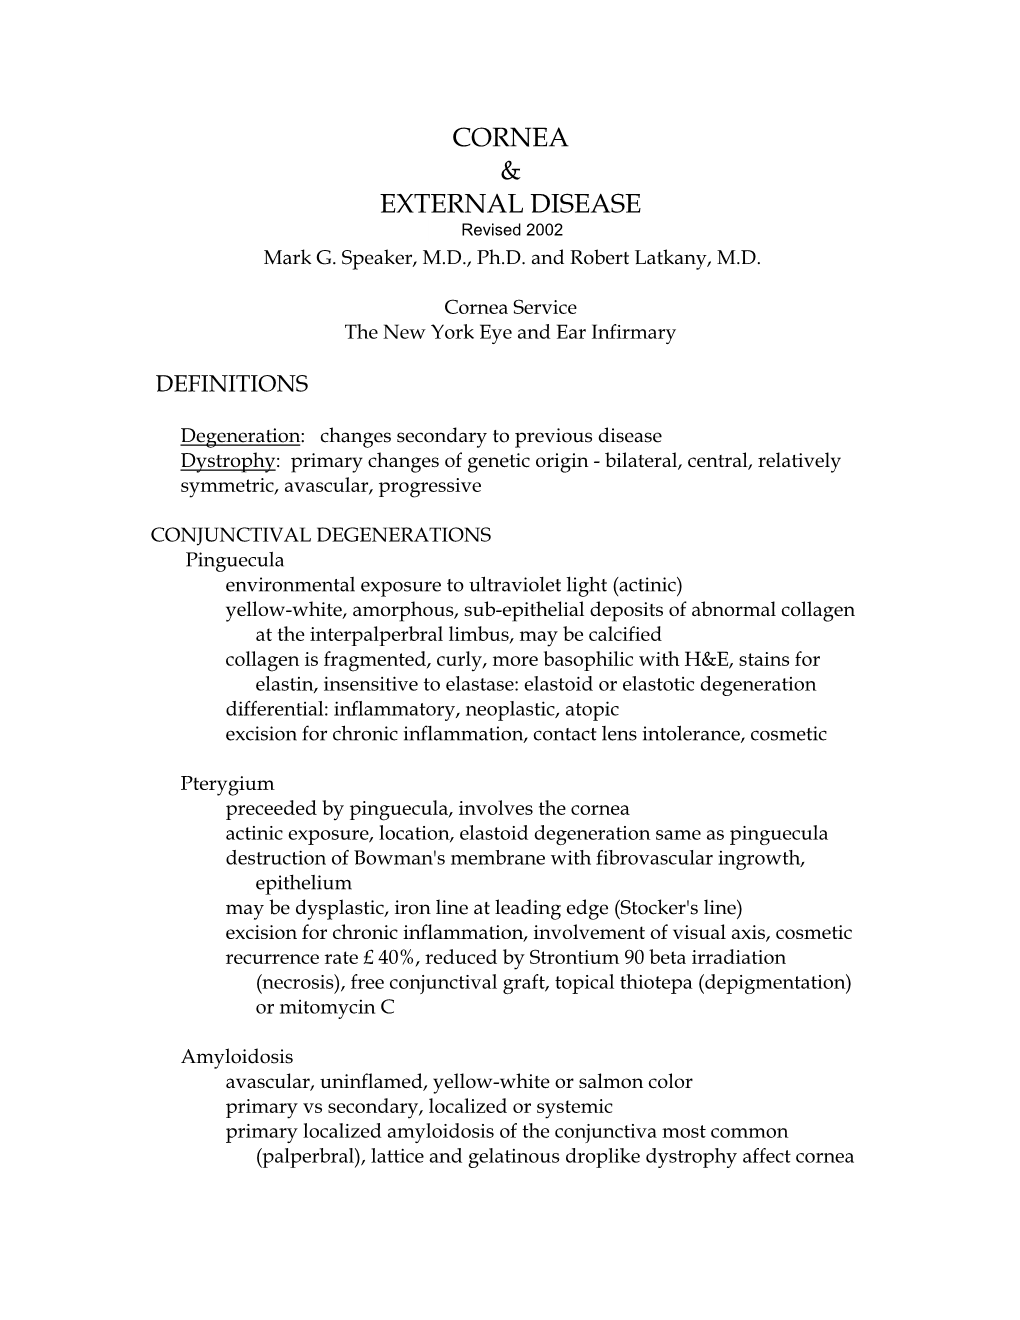 Cornea & External Disease